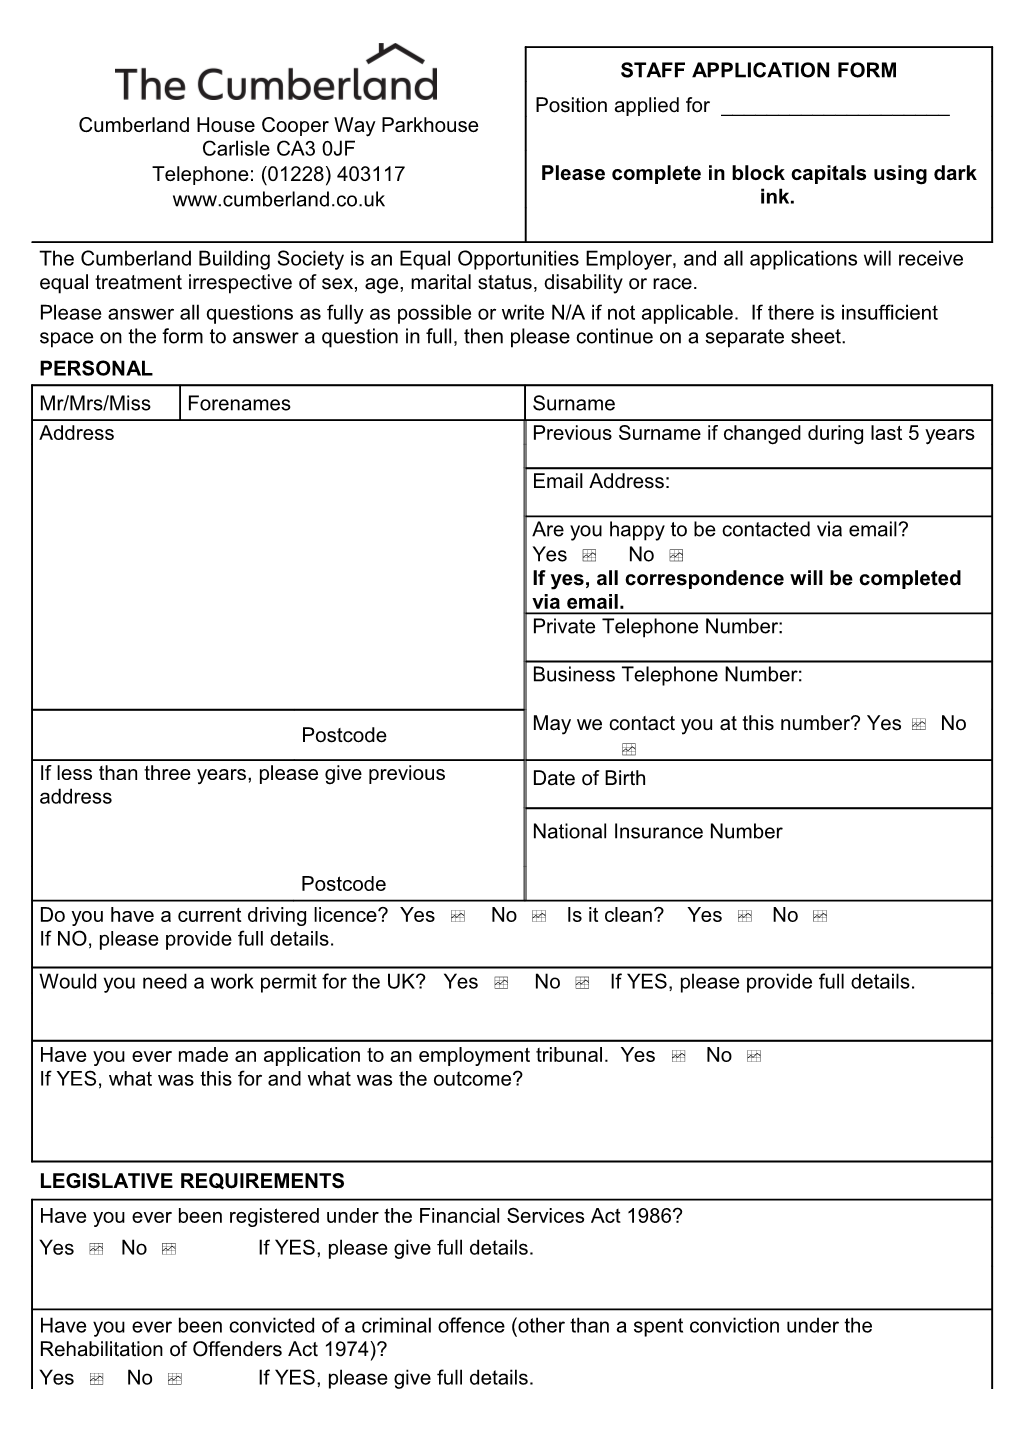 Staff Application Form s1